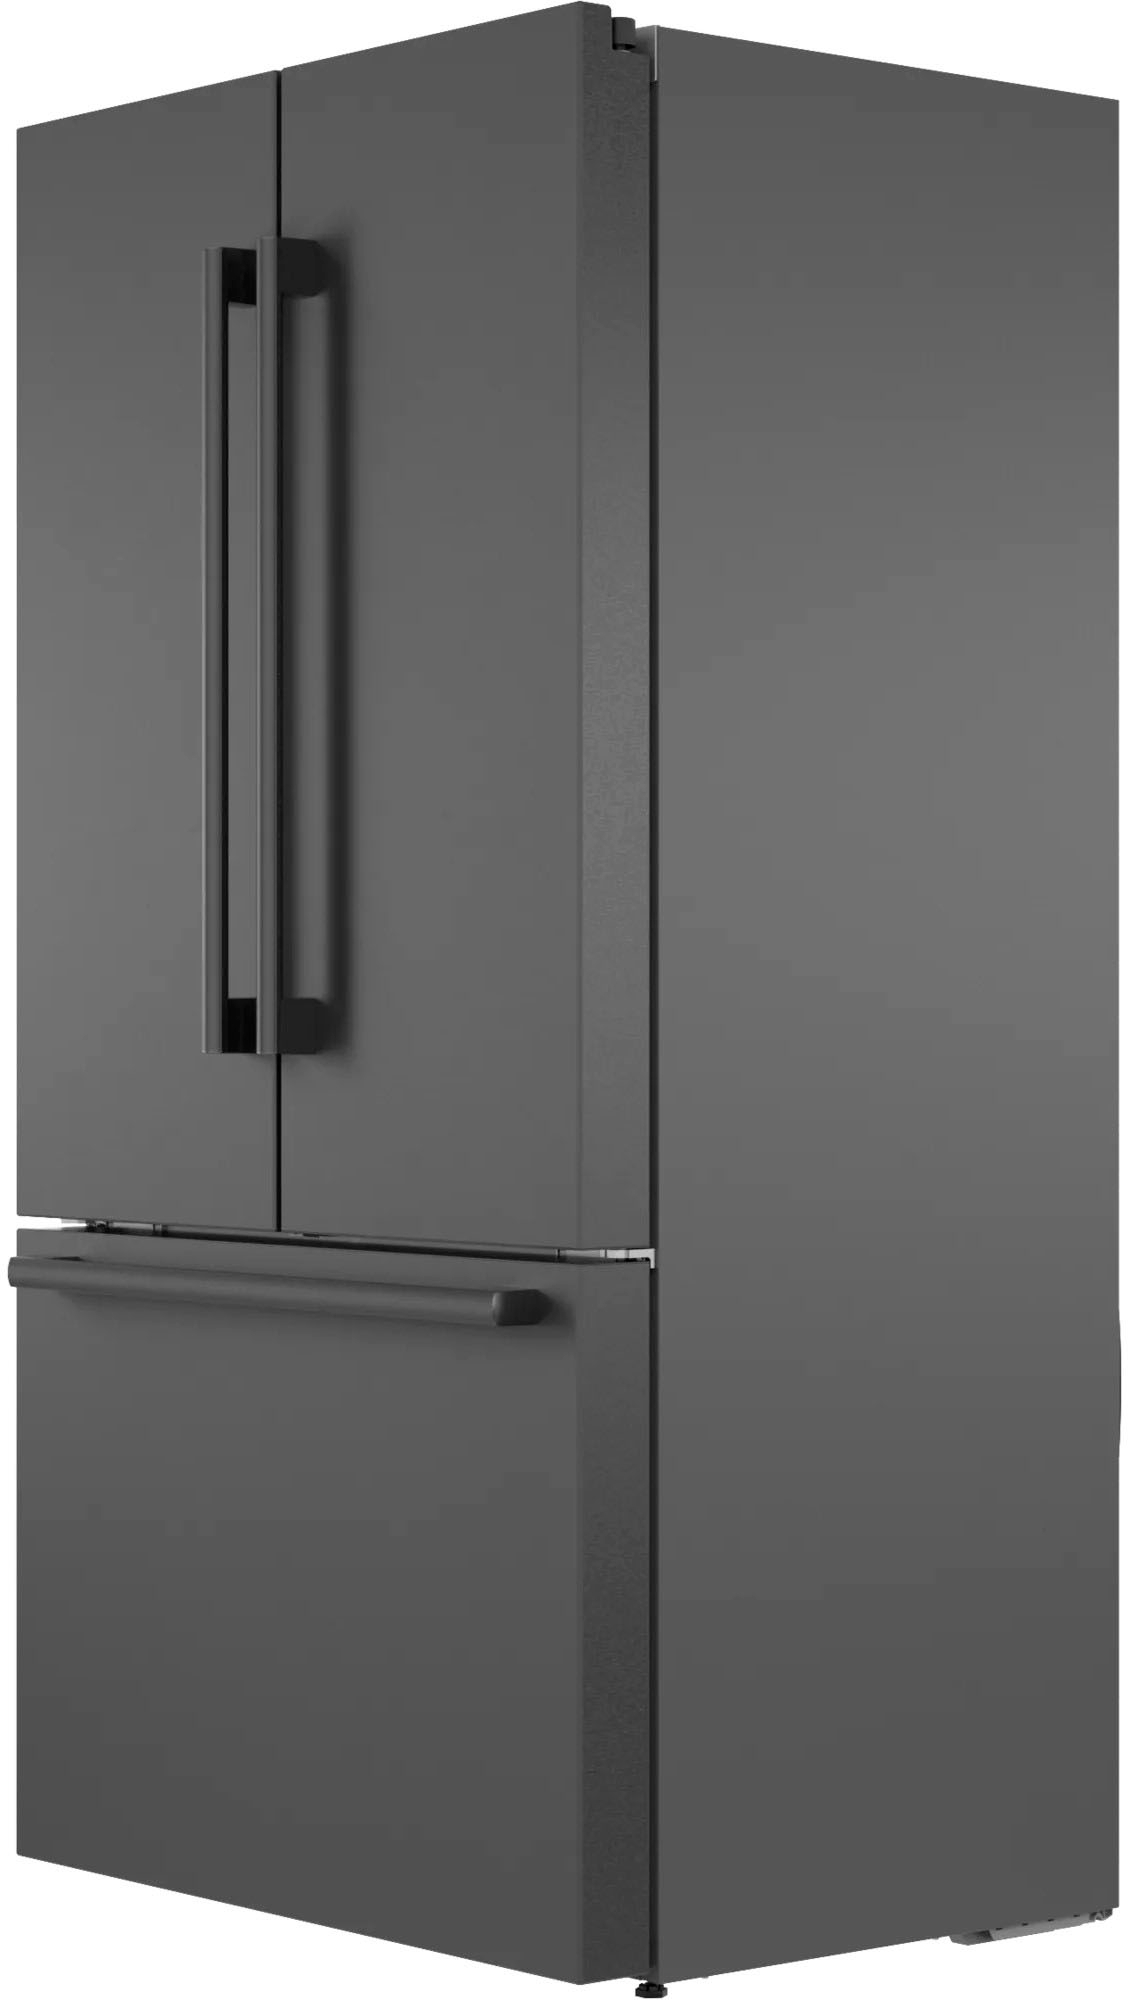 Left View: Bosch - 800 Series 21 Cu. Ft. French Door Counter-Depth Smart Refrigerator - Black Stainless Steel